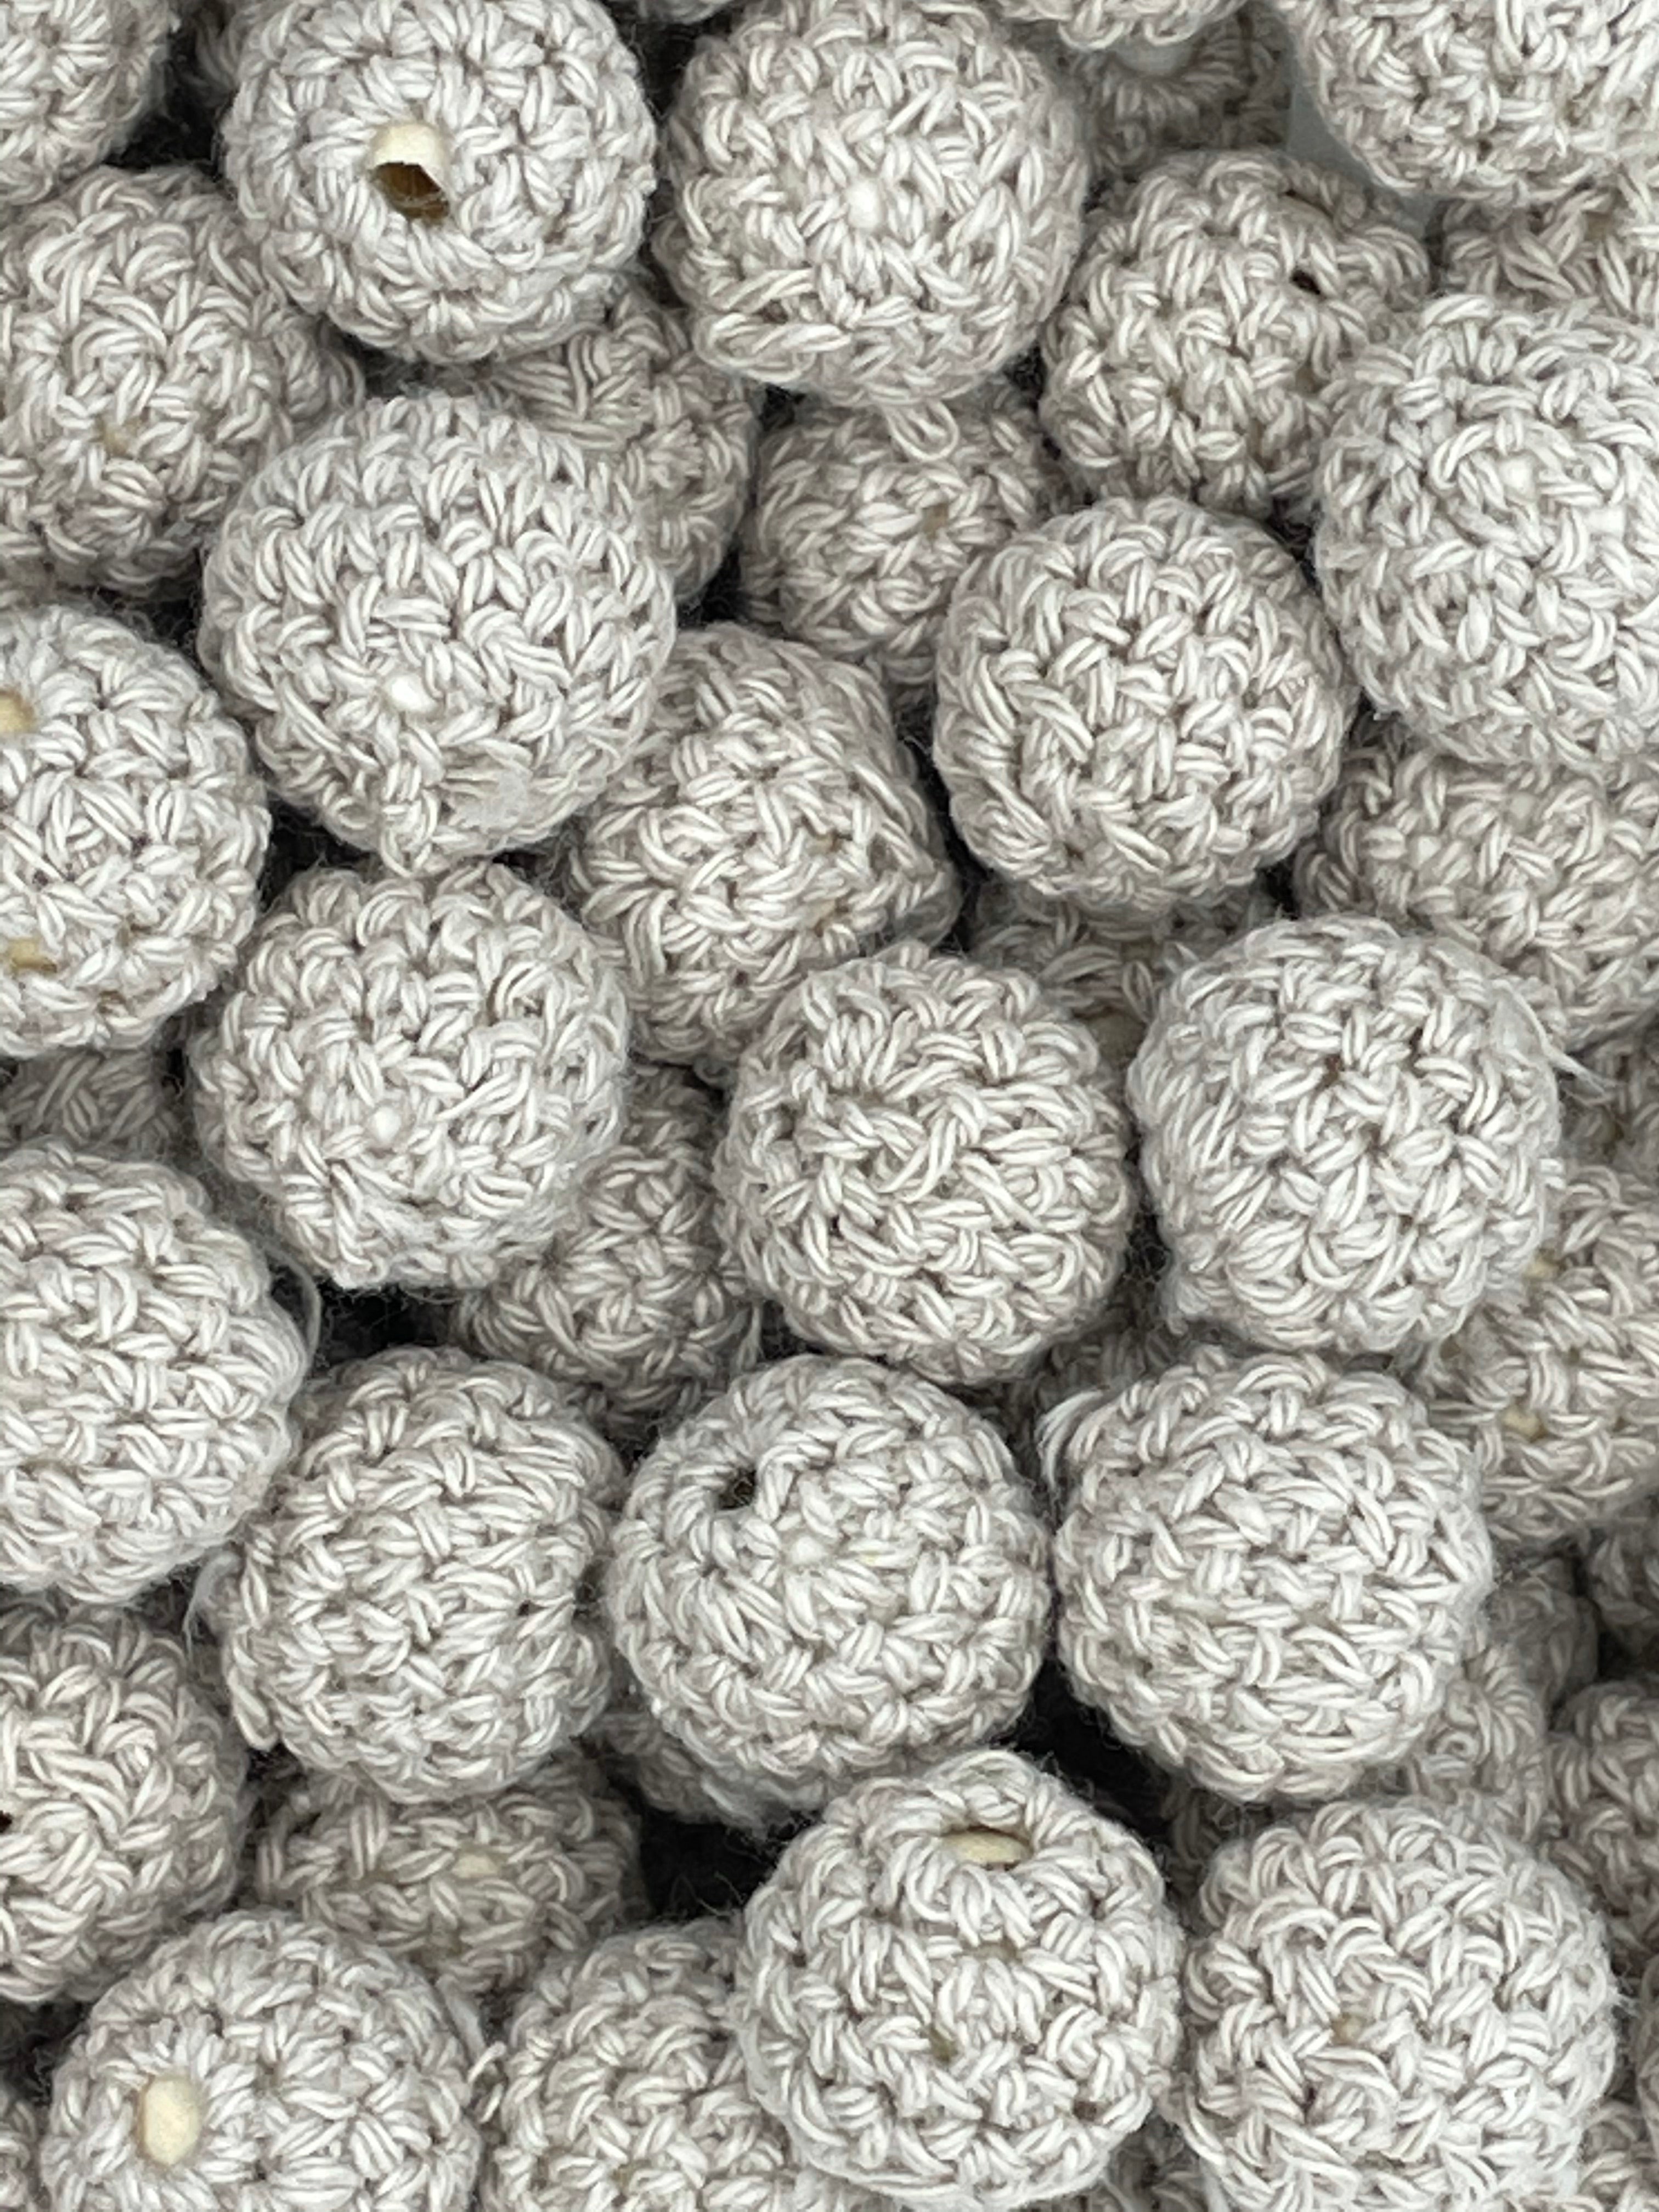 Crochet Beads - 16MM